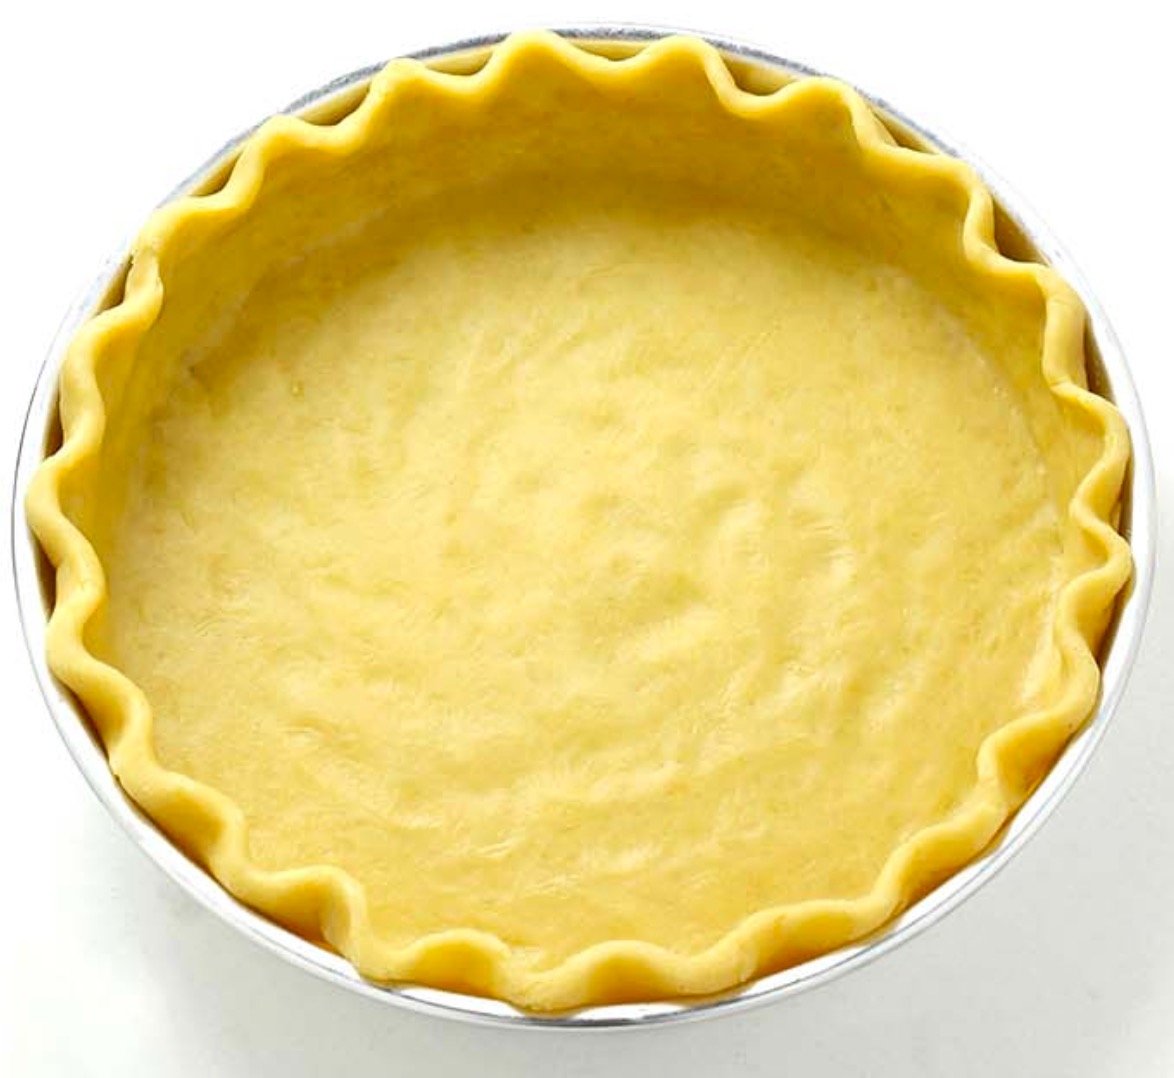 Easy Homemade All Butter Pie Crust Recipe